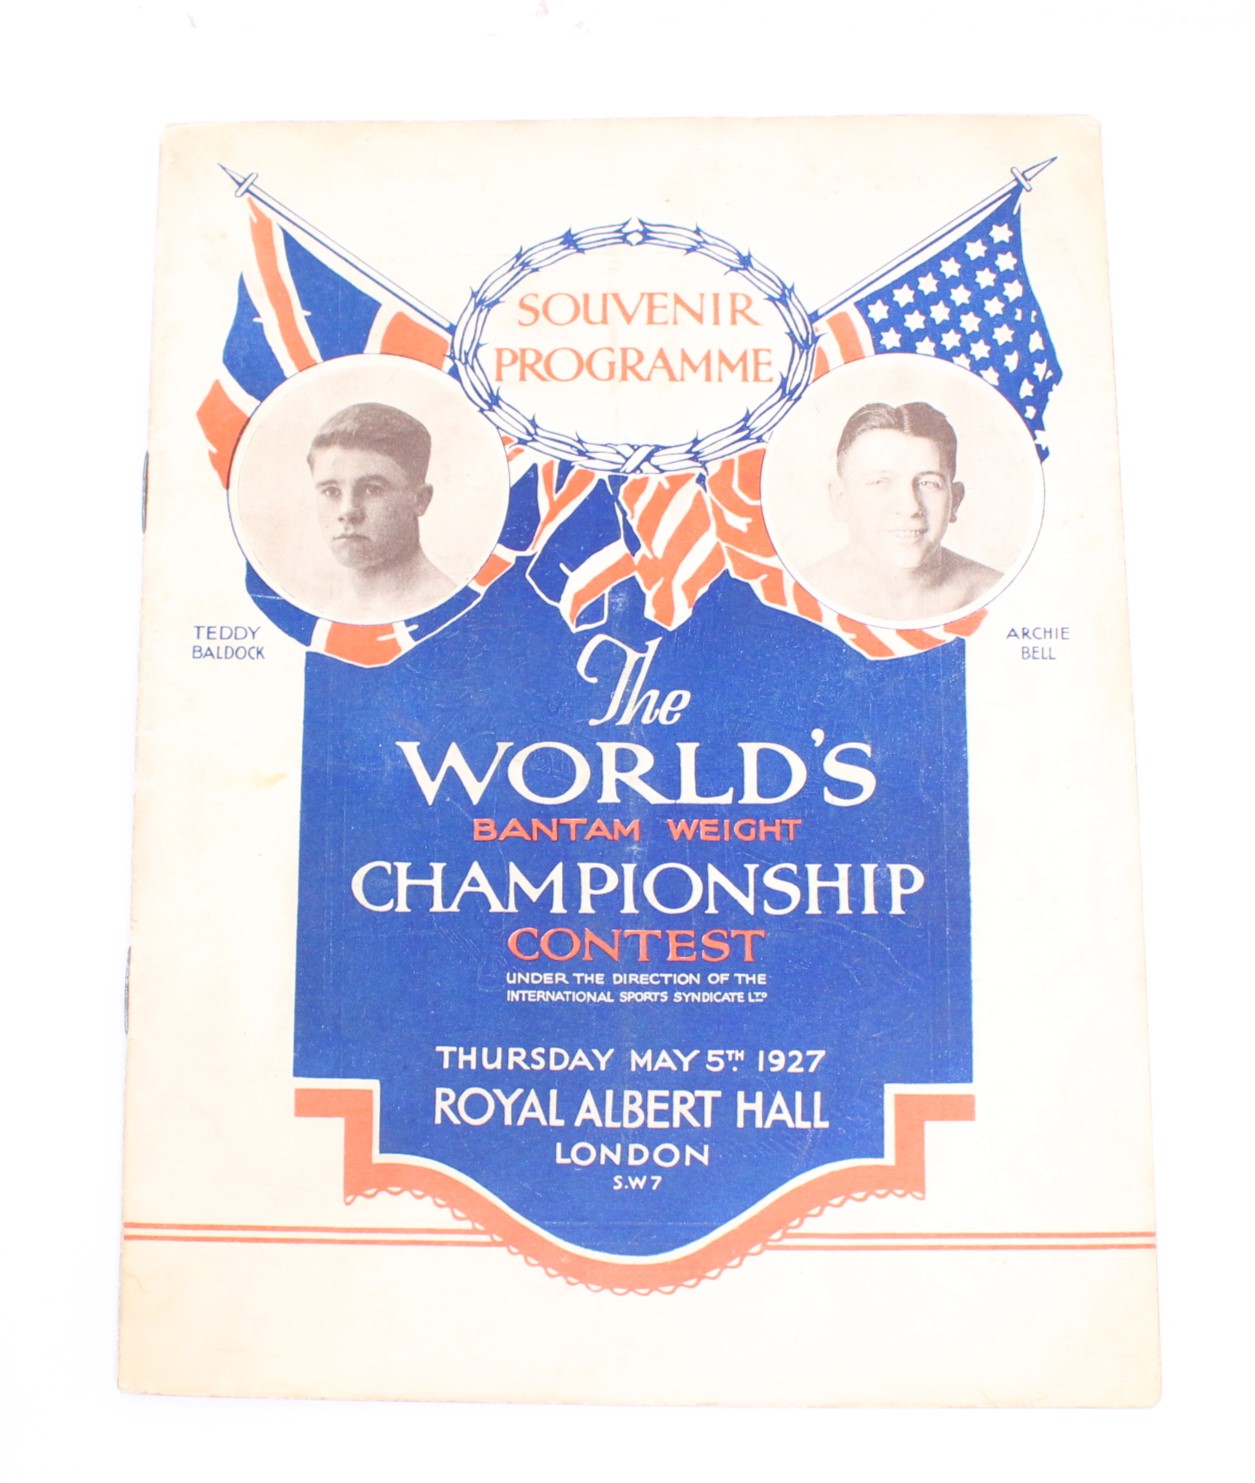 Boxing: A rare, original, World's Bantam Weight Championship Contest Souvenir Programme, Teddy